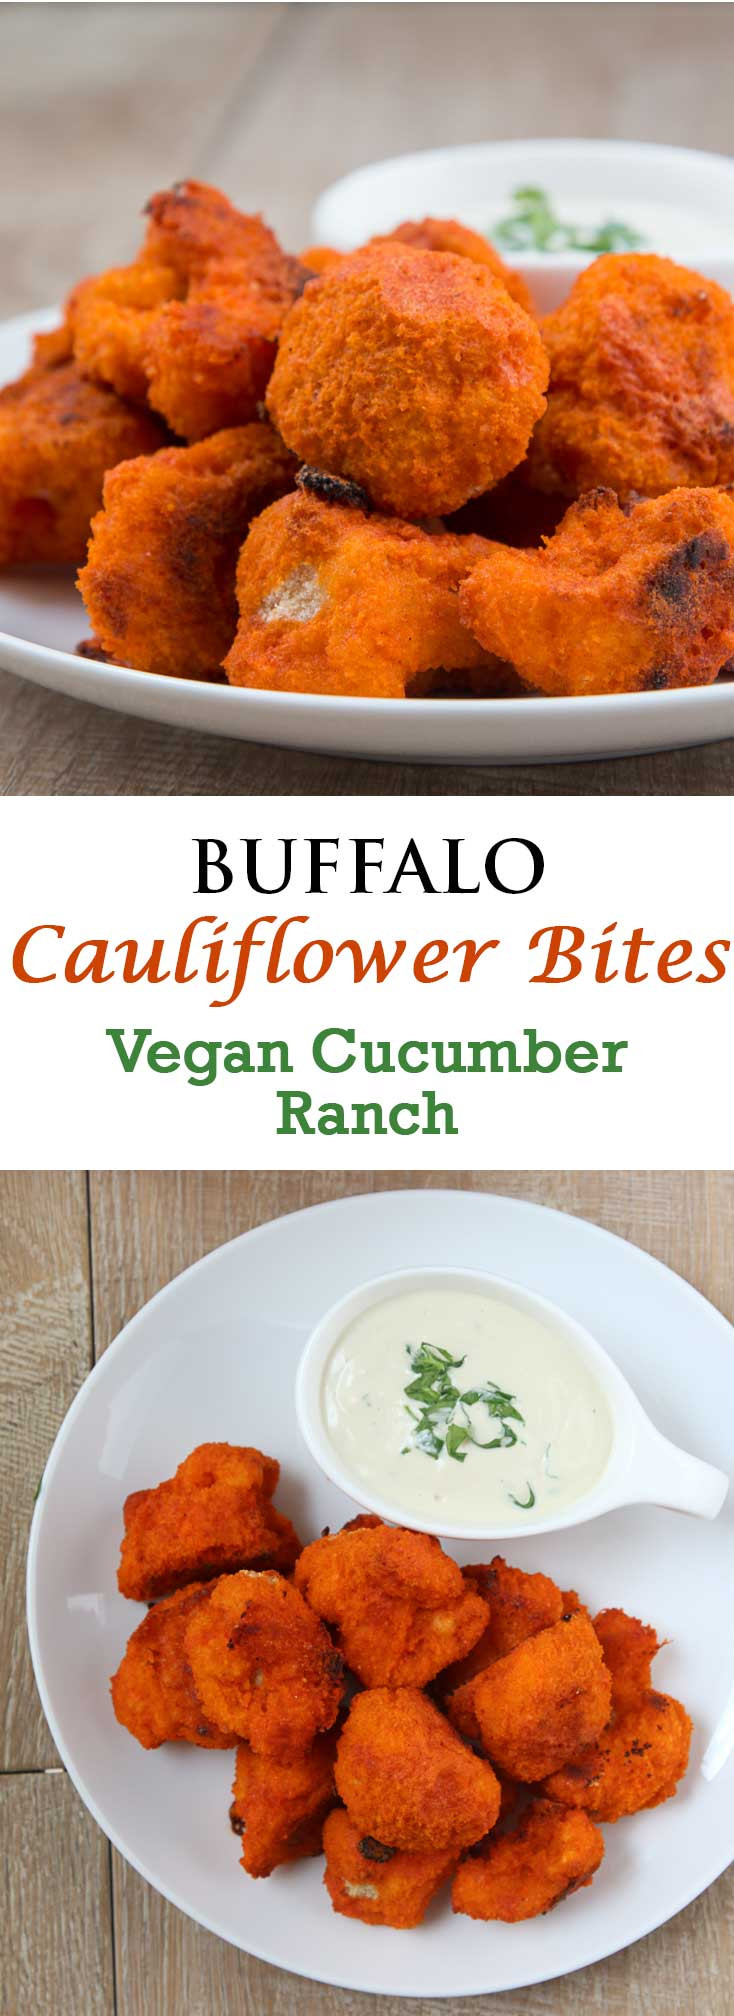 Vegan Buffalo Cauliflower
 Buffalo Cauliflower Bites With Vegan Cucumber Ranch